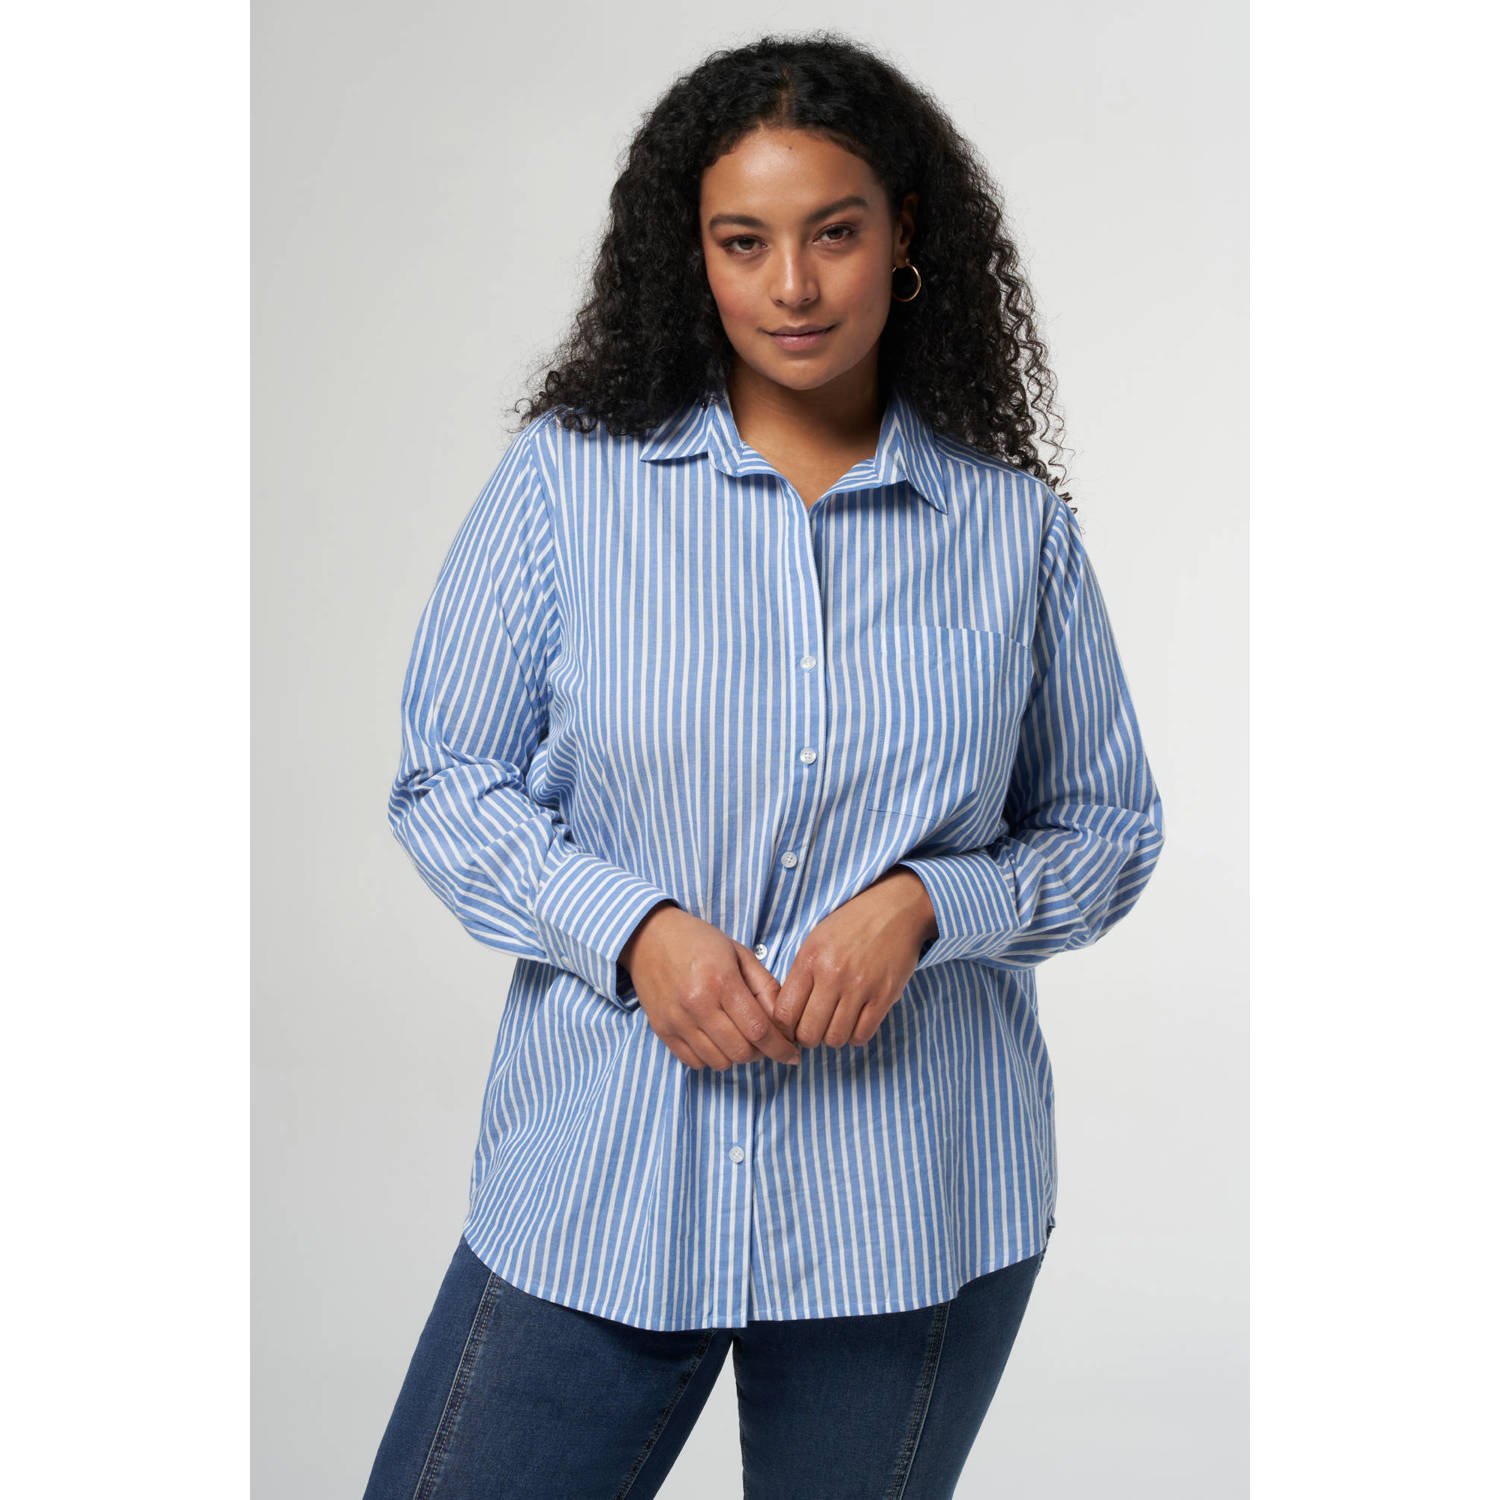 MS Mode gestreepte blouse blauw wit